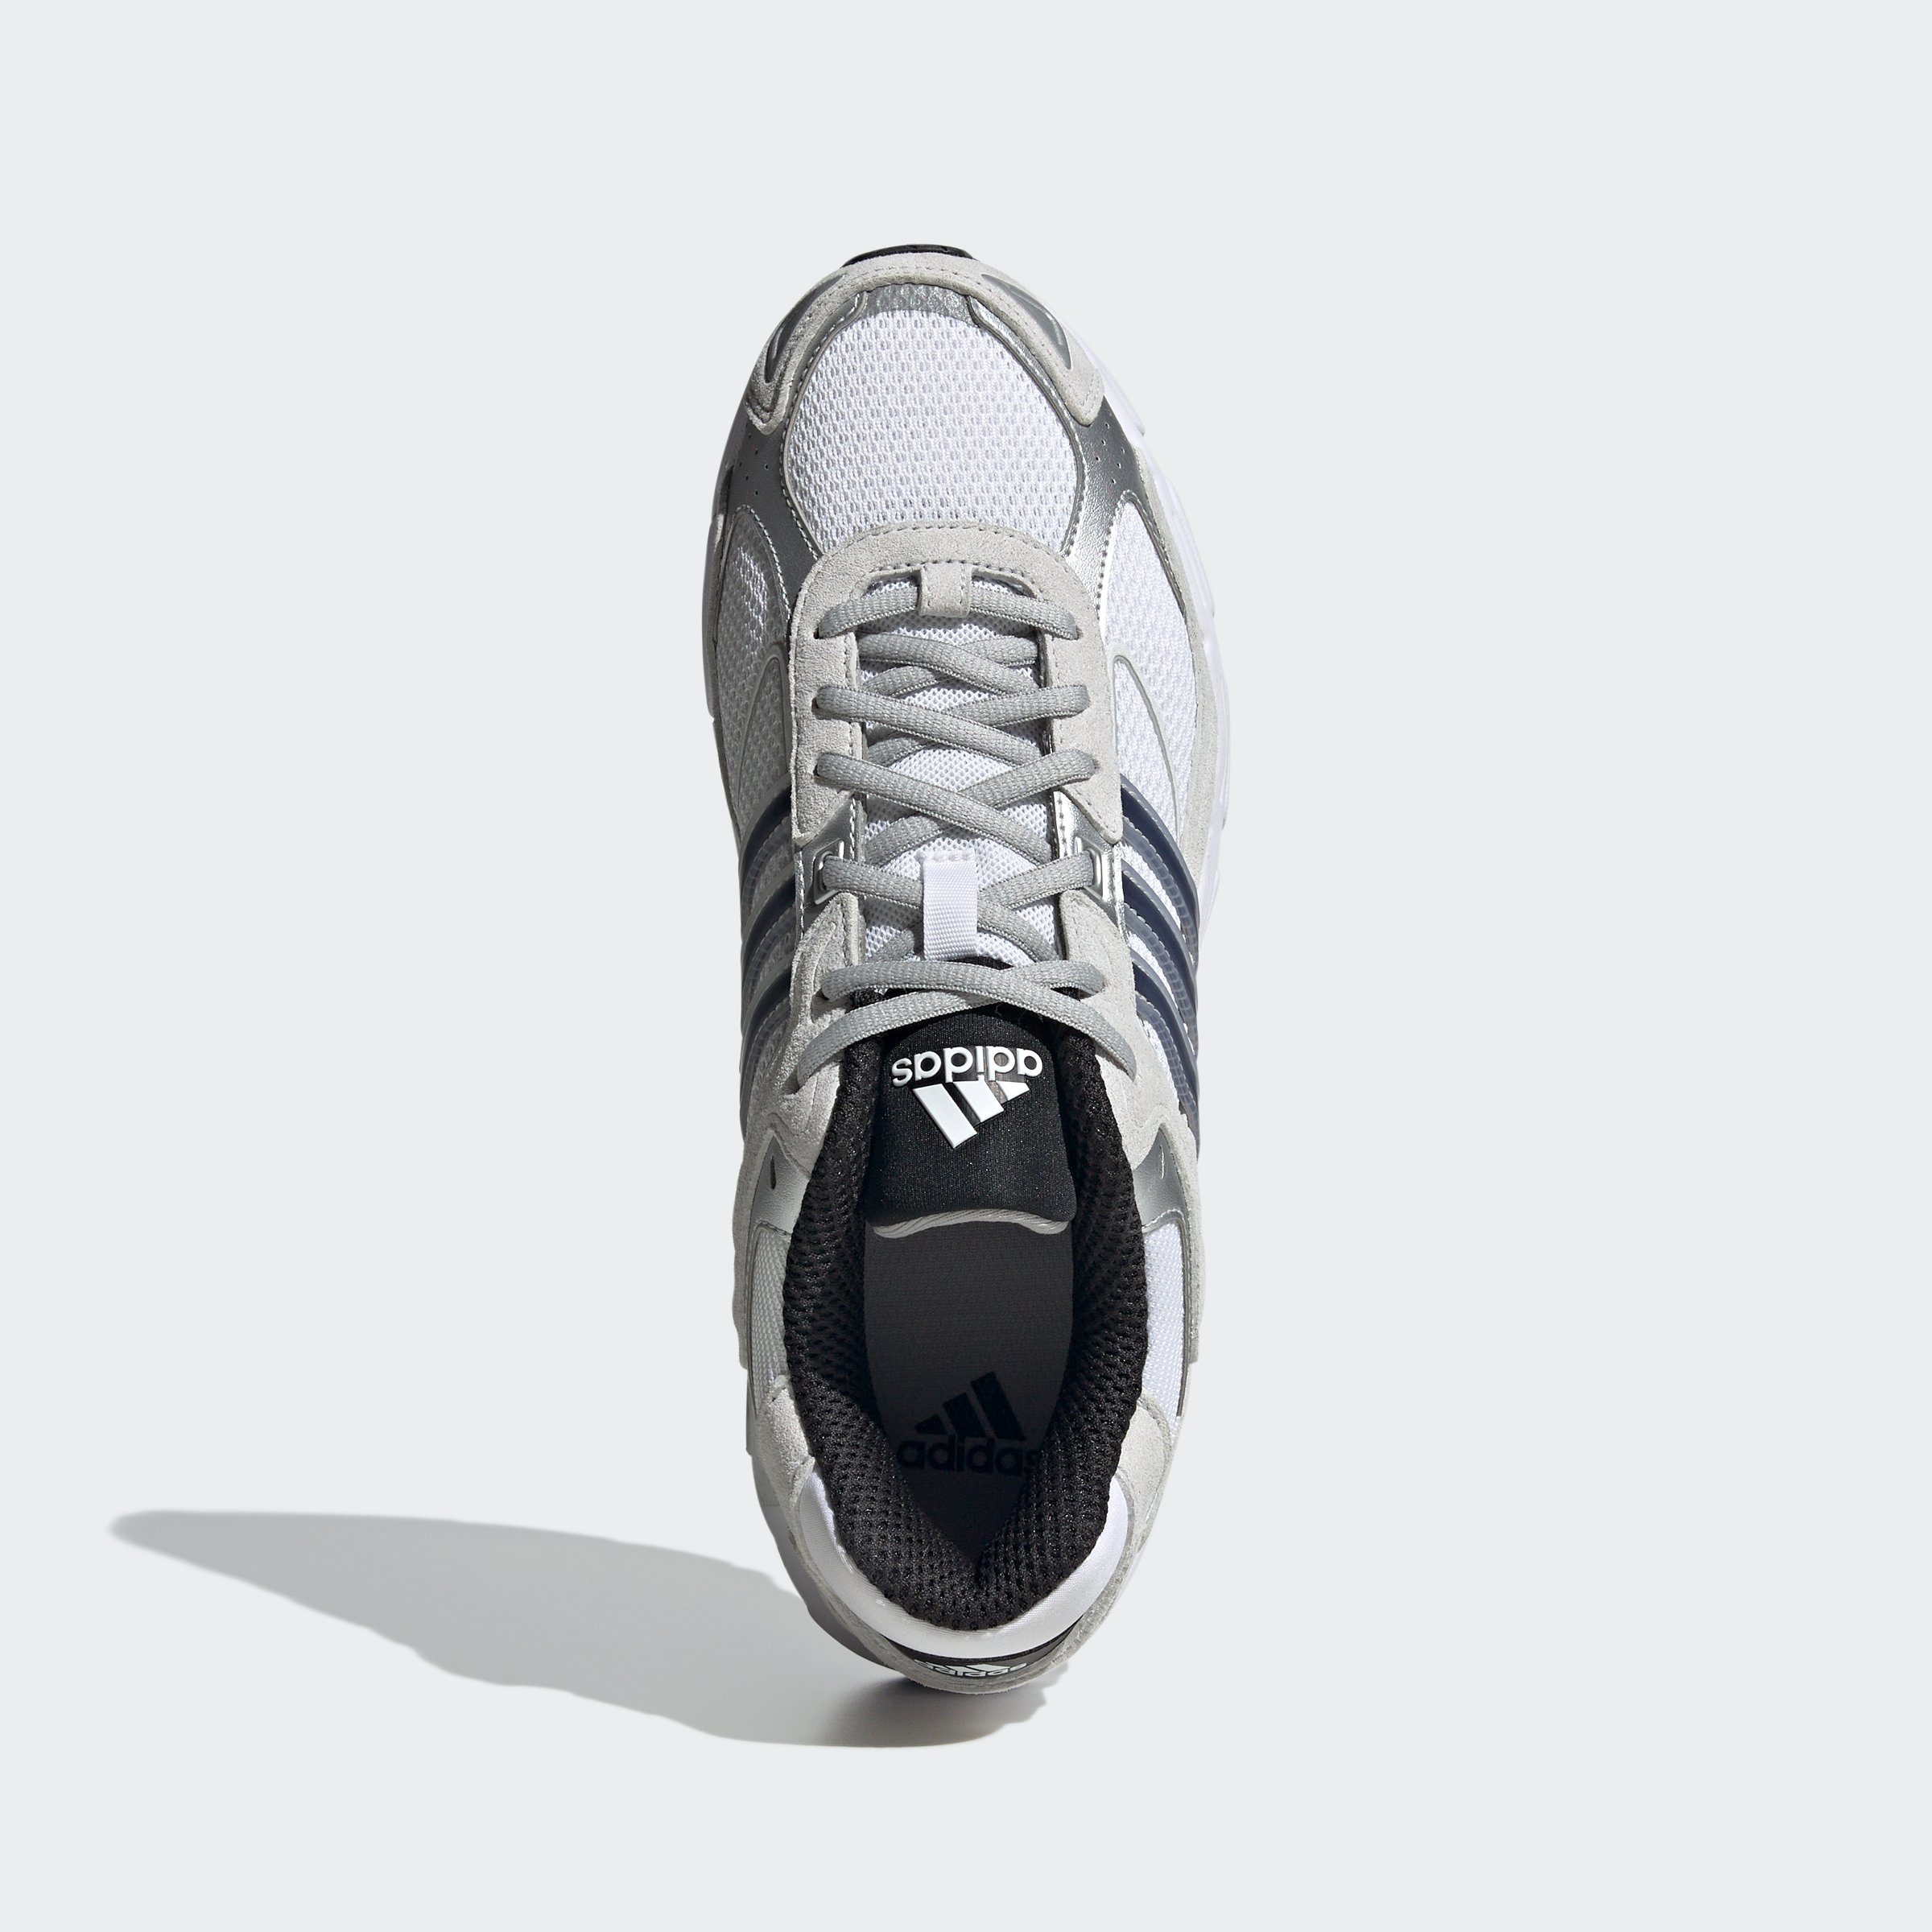 Cloud Core / Grey RESPONSE Black Originals adidas Sneaker Two White / CL